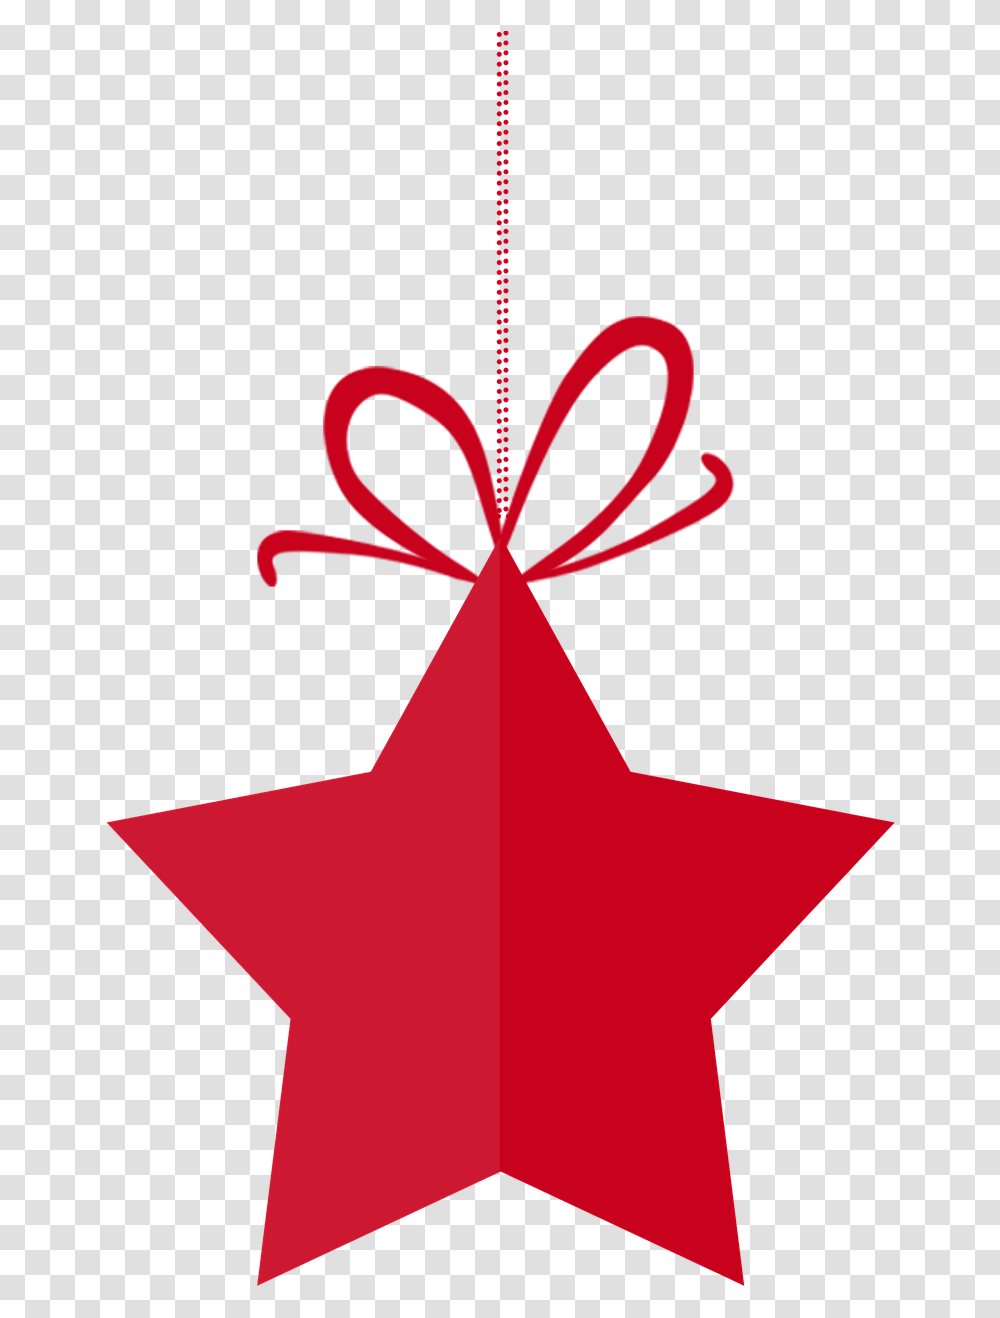 Download Hd Red Christmas Star Image Star Photoshop, Symbol, Star Symbol, Ornament Transparent Png